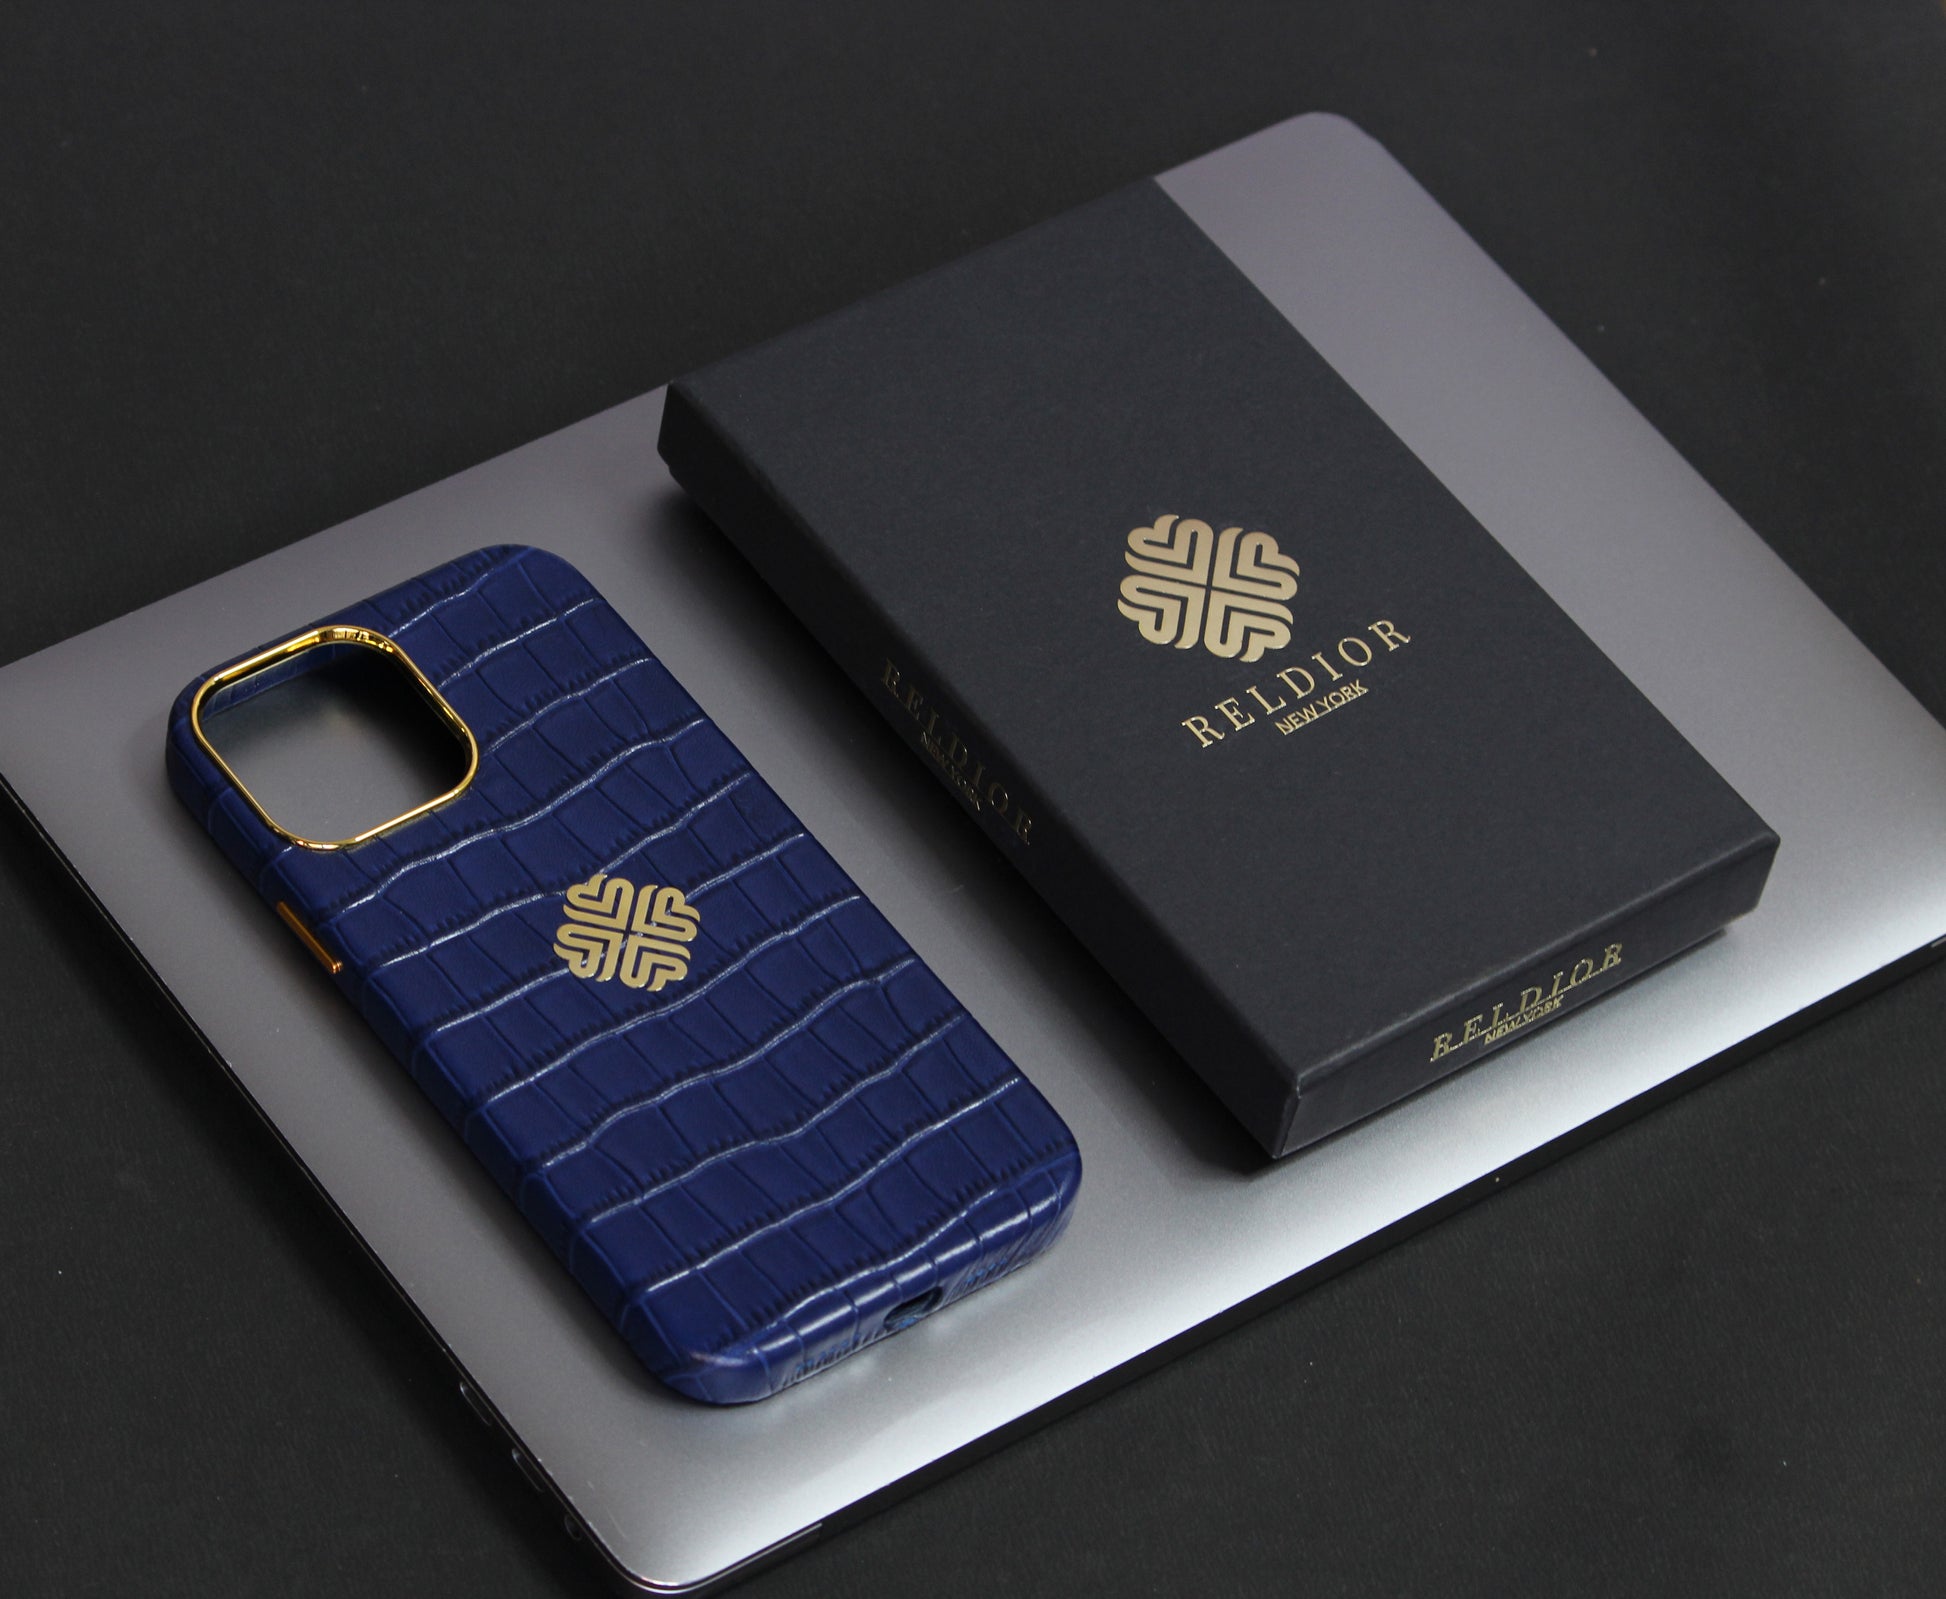 Midnight blue apple phone case by Reldior